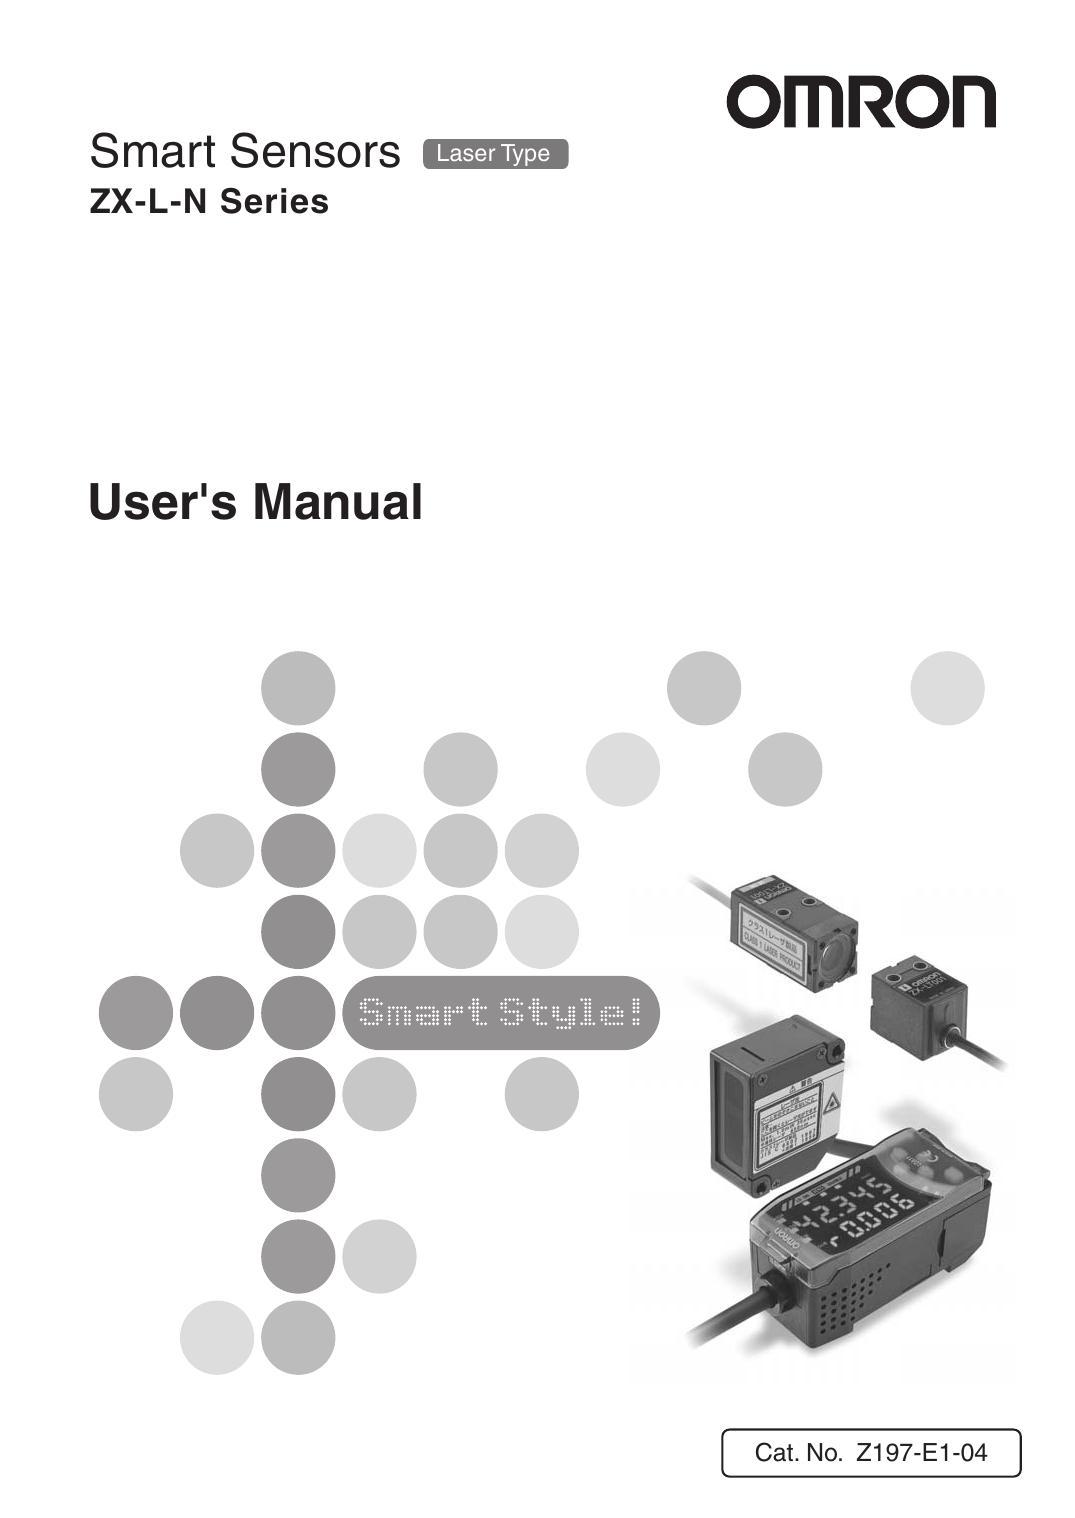 omron-smart-sensors-zx-l-n-series-users-manual.pdf